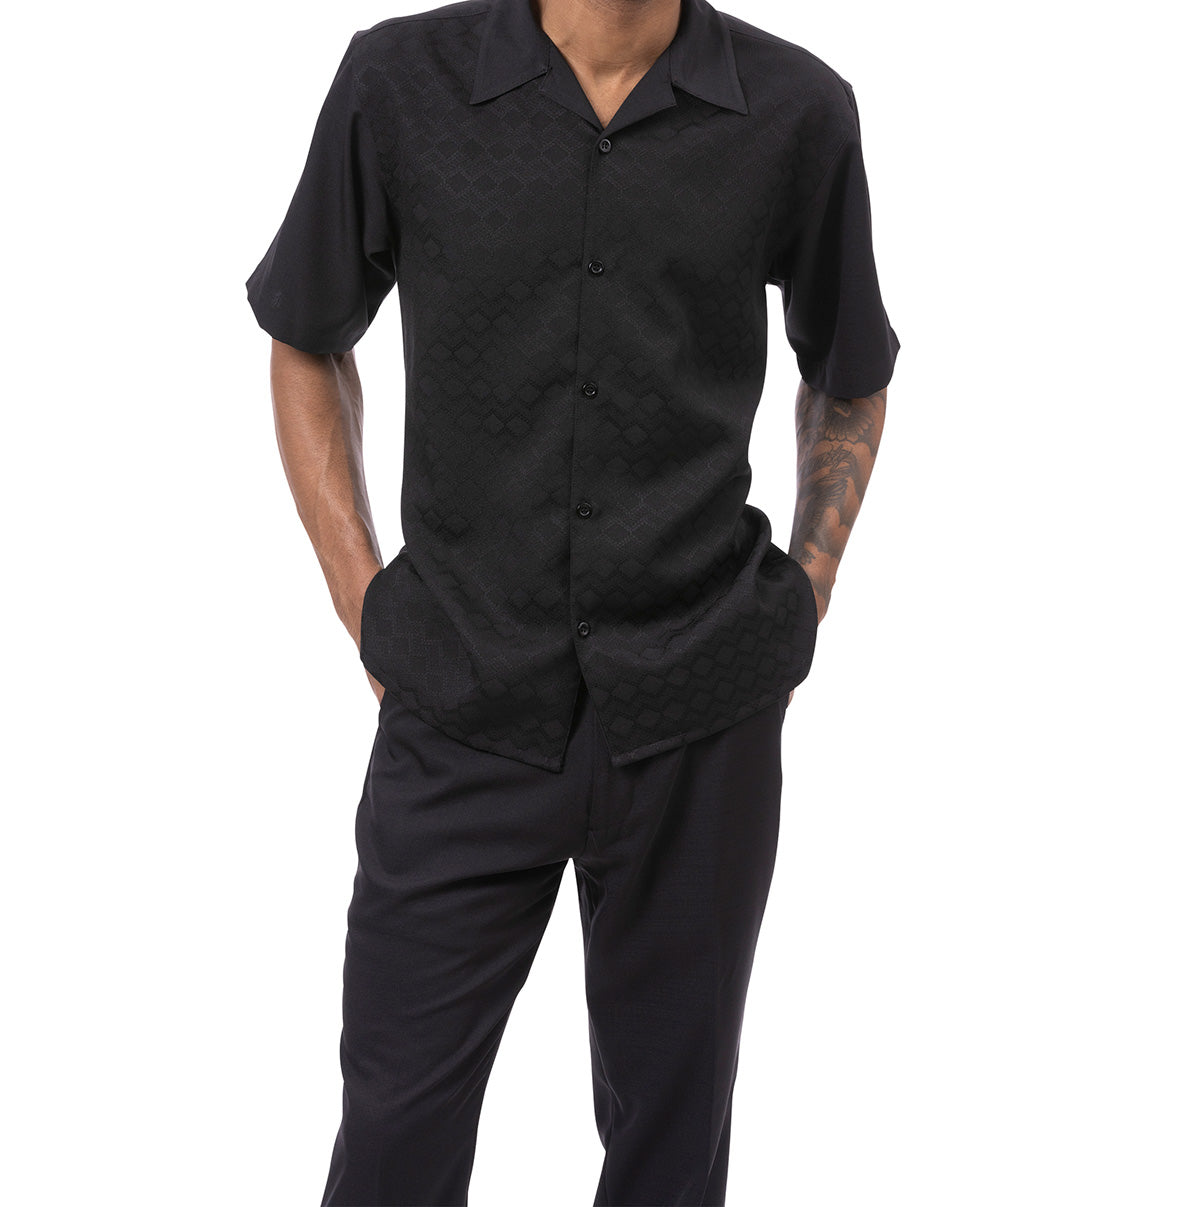 Black Tone-on-tone Walking Suit 2 Piece Short Sleeve Set